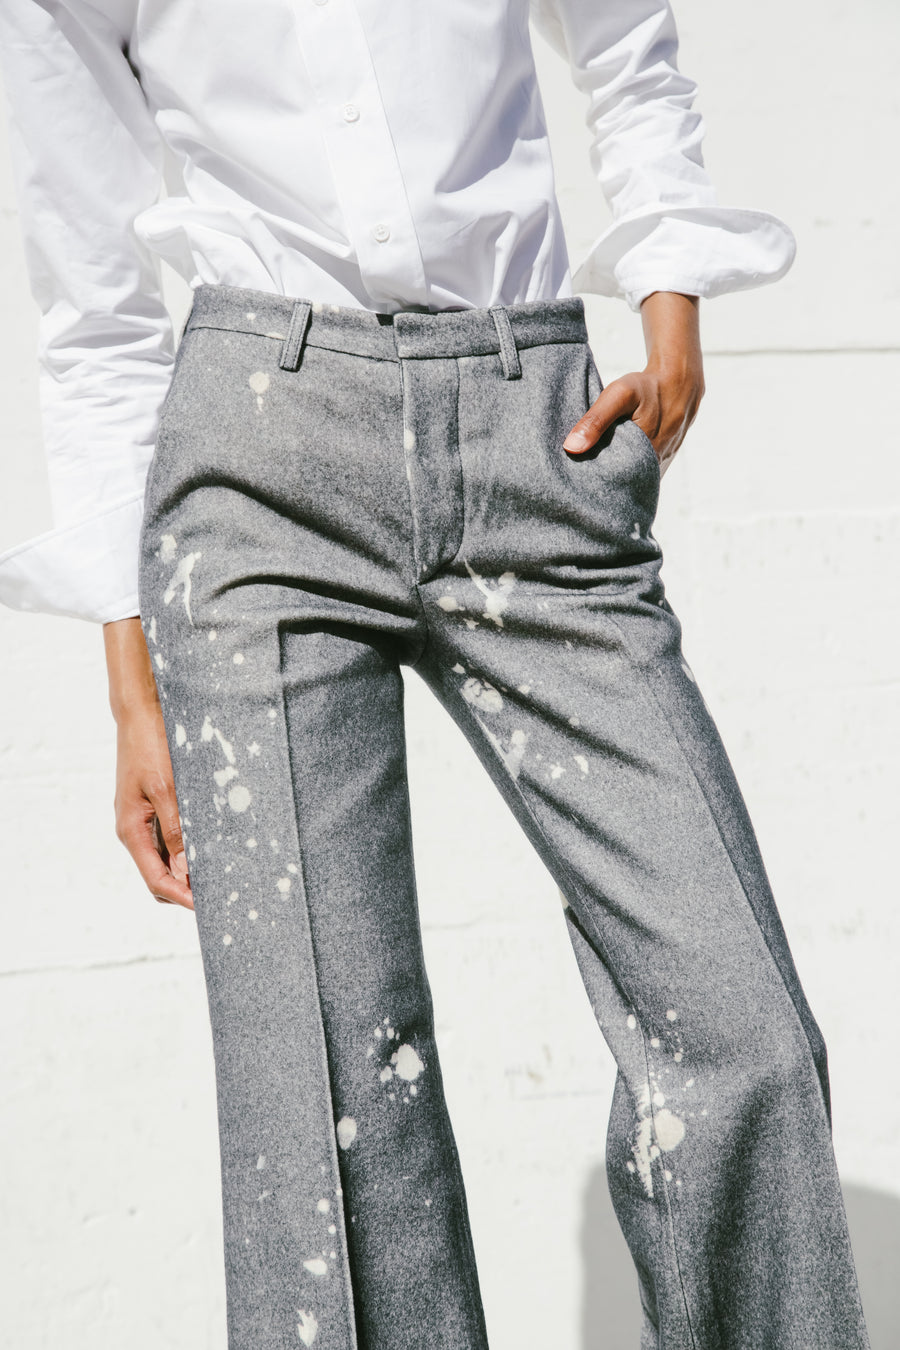 Relaxed Trouser in Paint Splatter on Grey